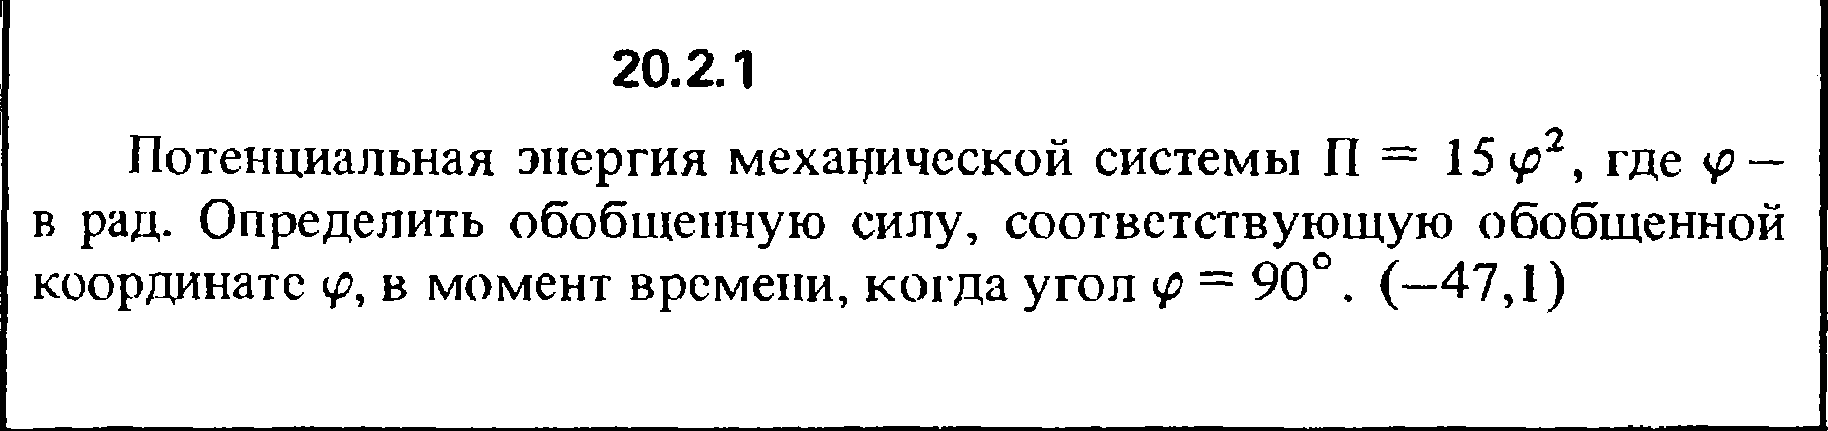 Решение 20.2.1 из сборника (решебника) Кепе О.Е. 1989